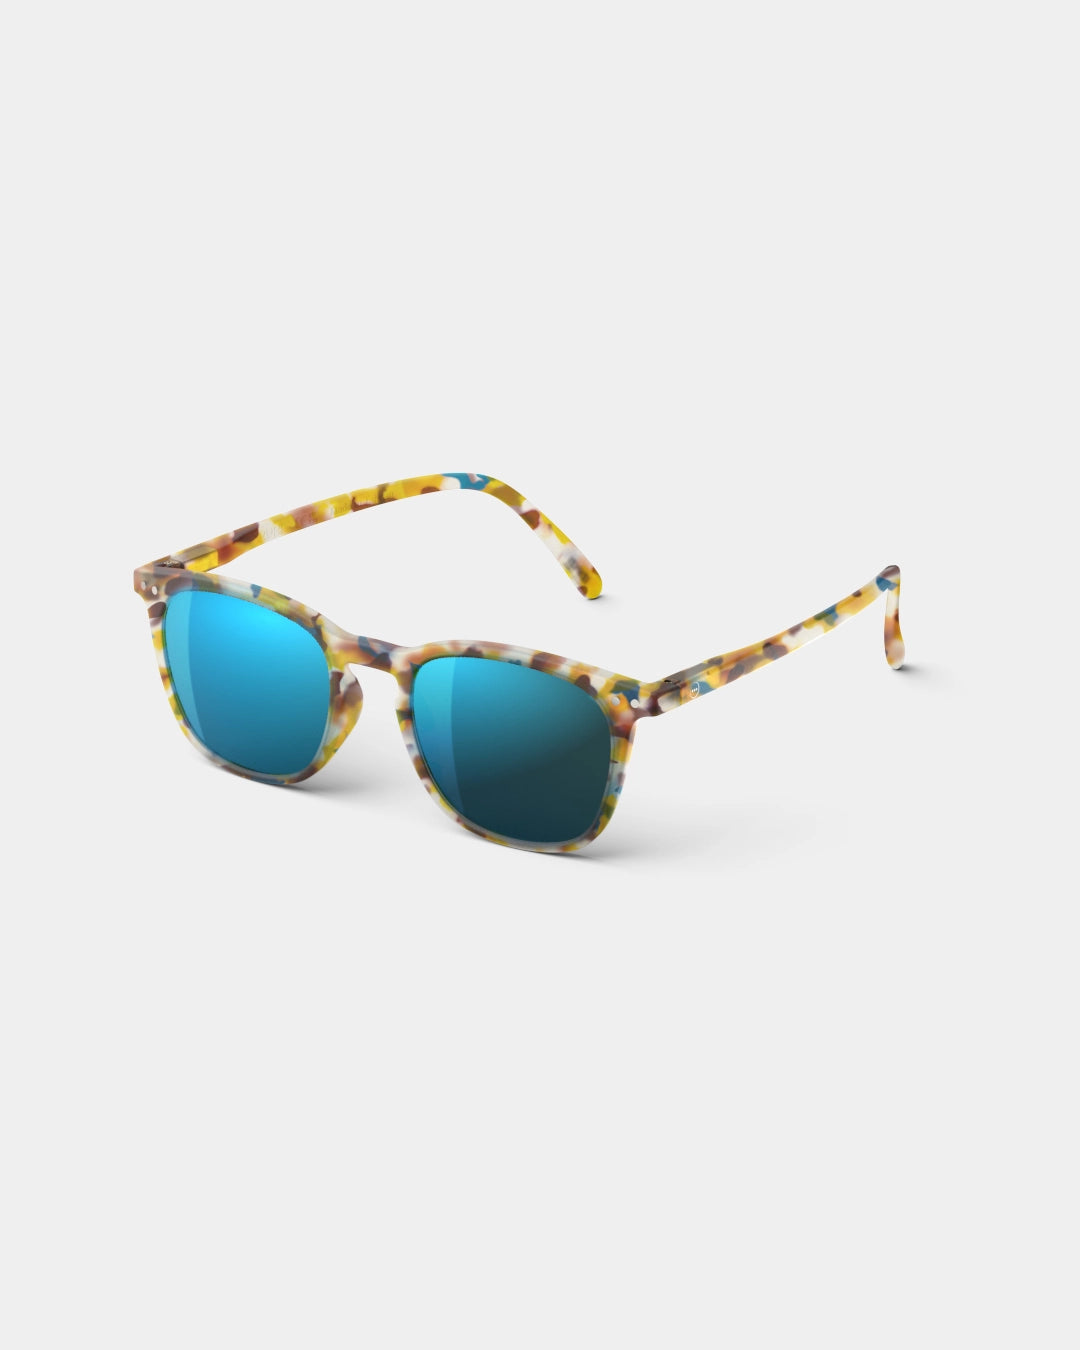 Sunglasses ‘Blue Tortoise’ Blue Mirror Lens #E